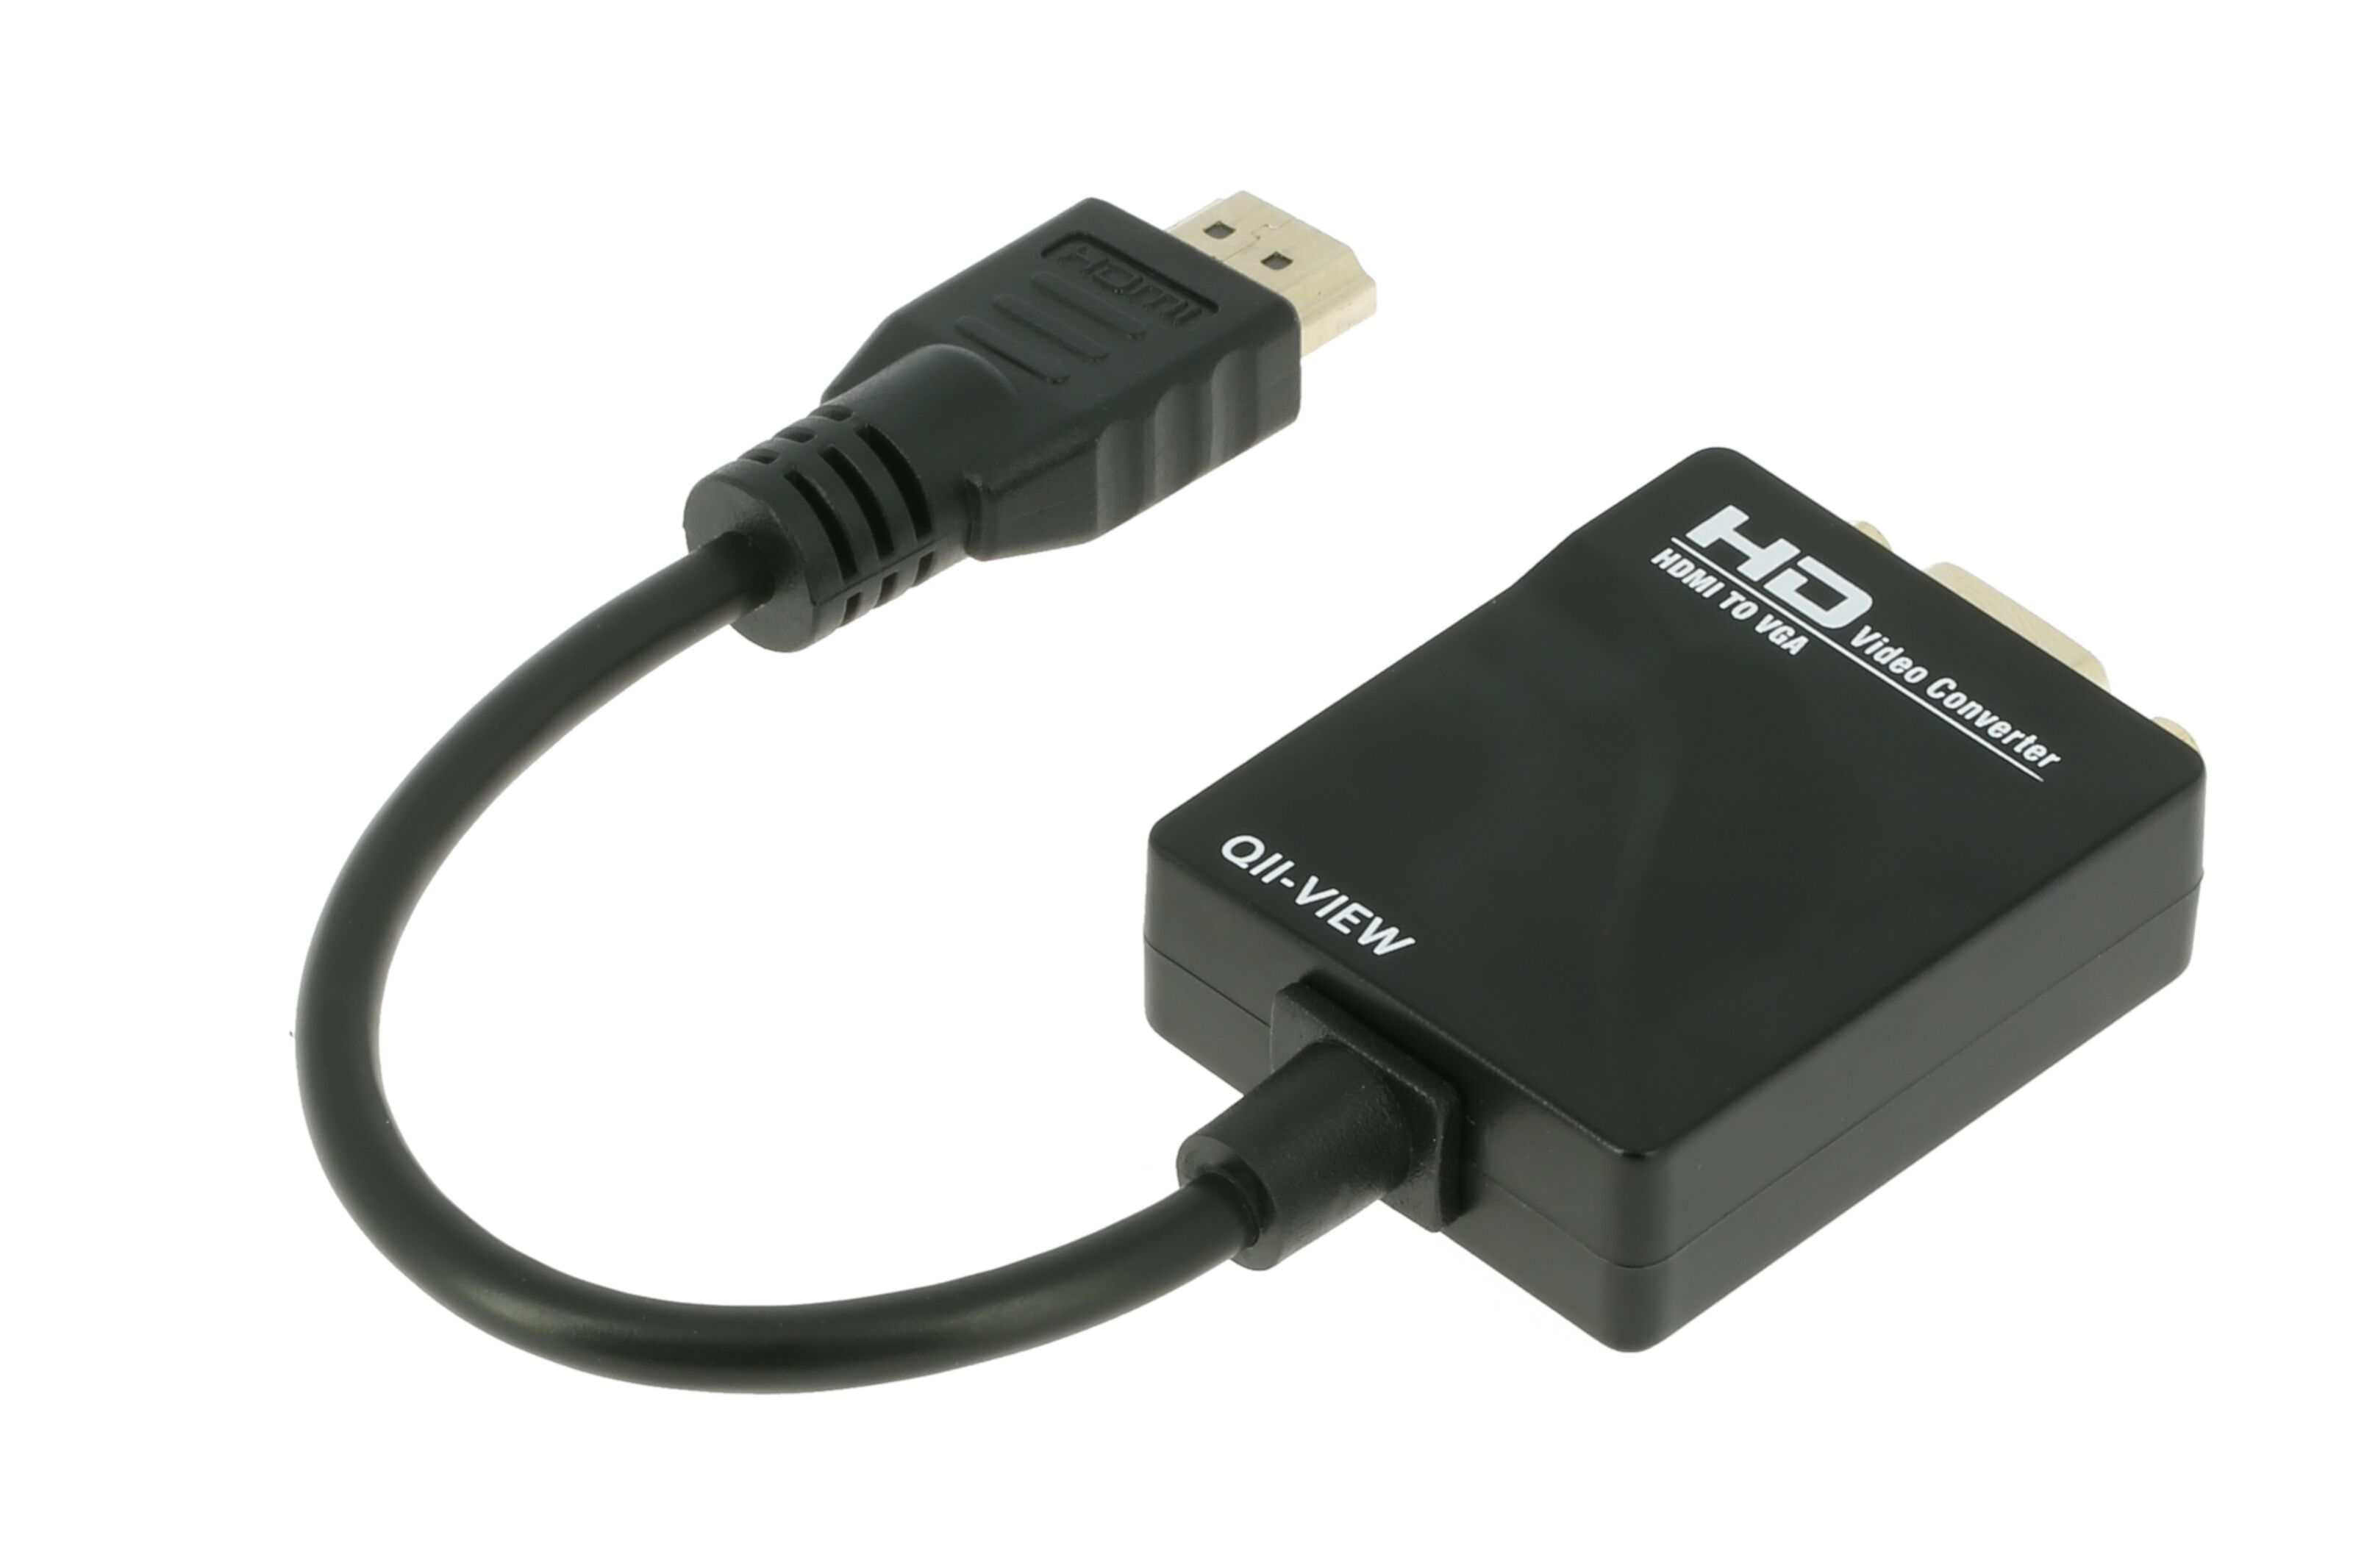 HDMI2VGAADA, i-tec HDMI to VGA Cable Adapter